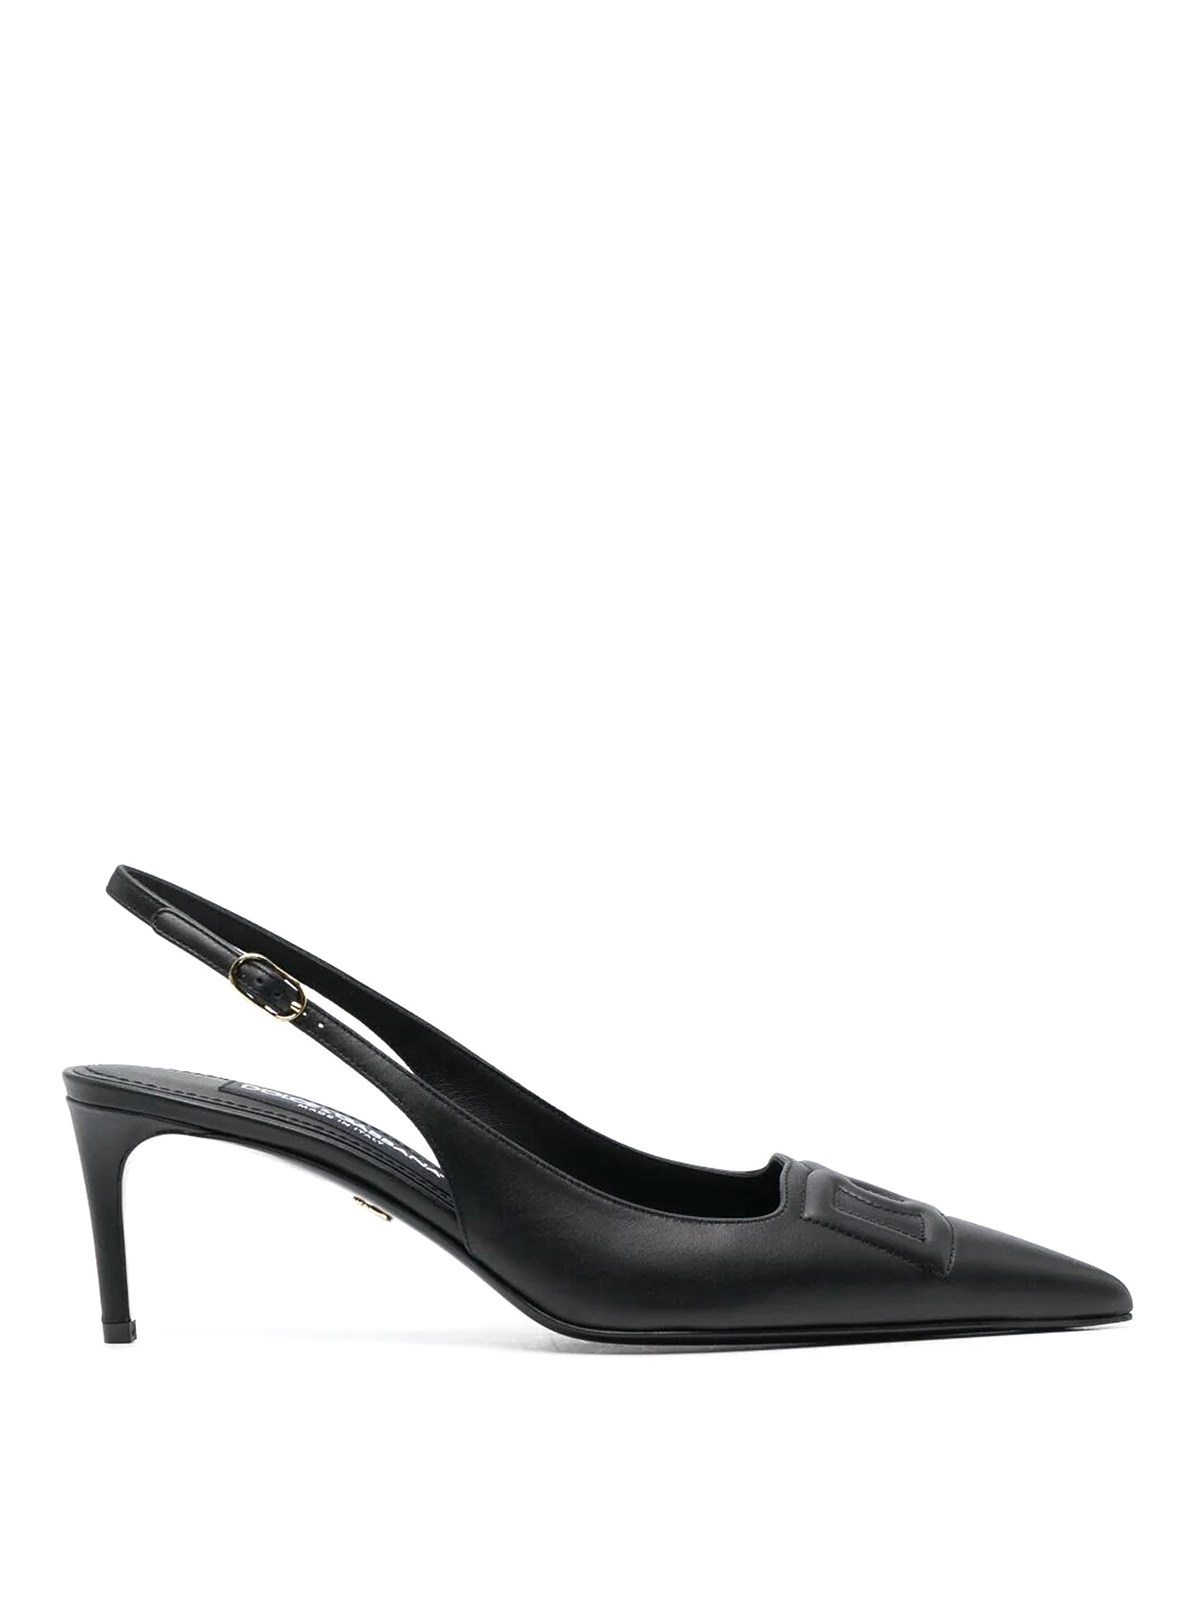 Court shoes Dolce & Gabbana - Lollo r60 - CG0676AW57680999